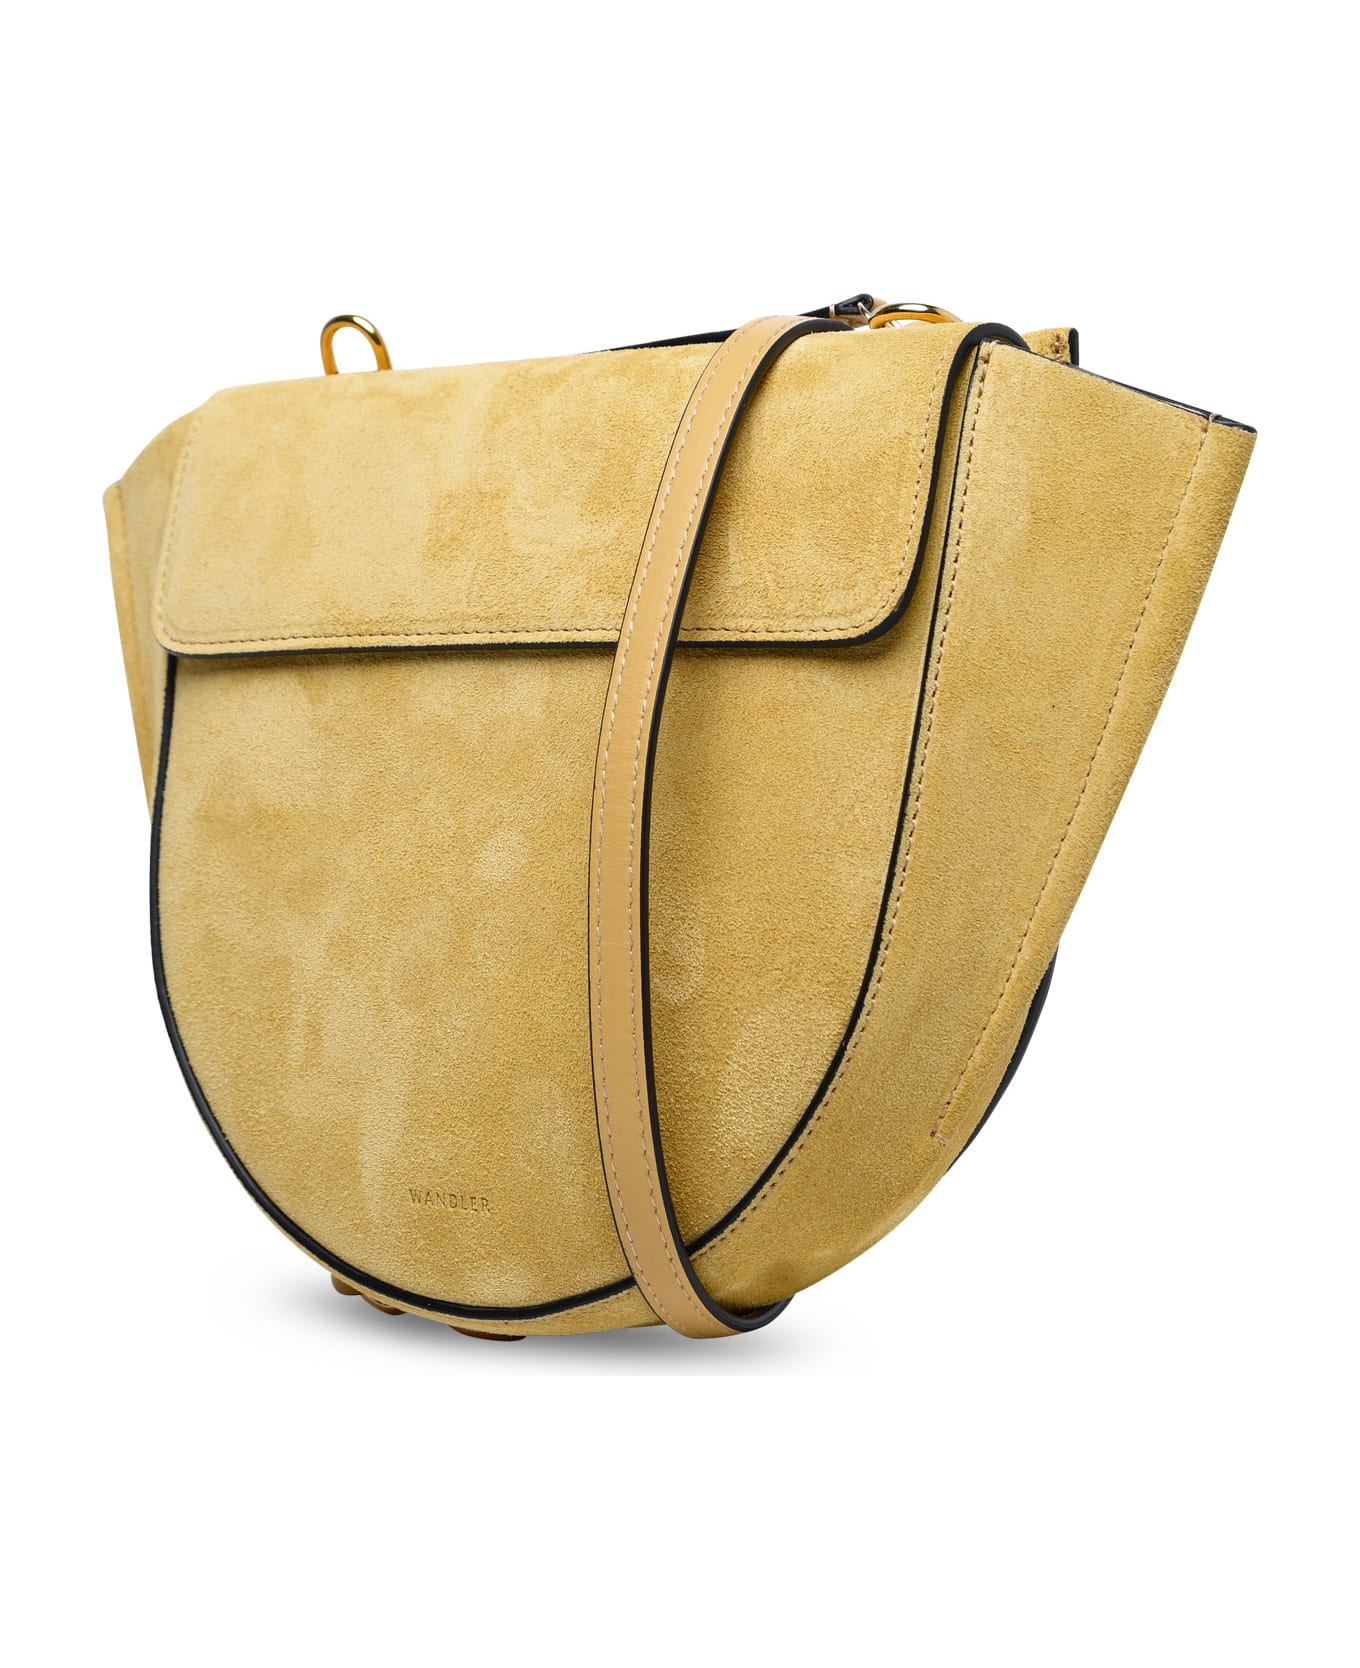 Wandler Mini 'hortensia' Sand Calf Leather Bag - Beige トートバッグ